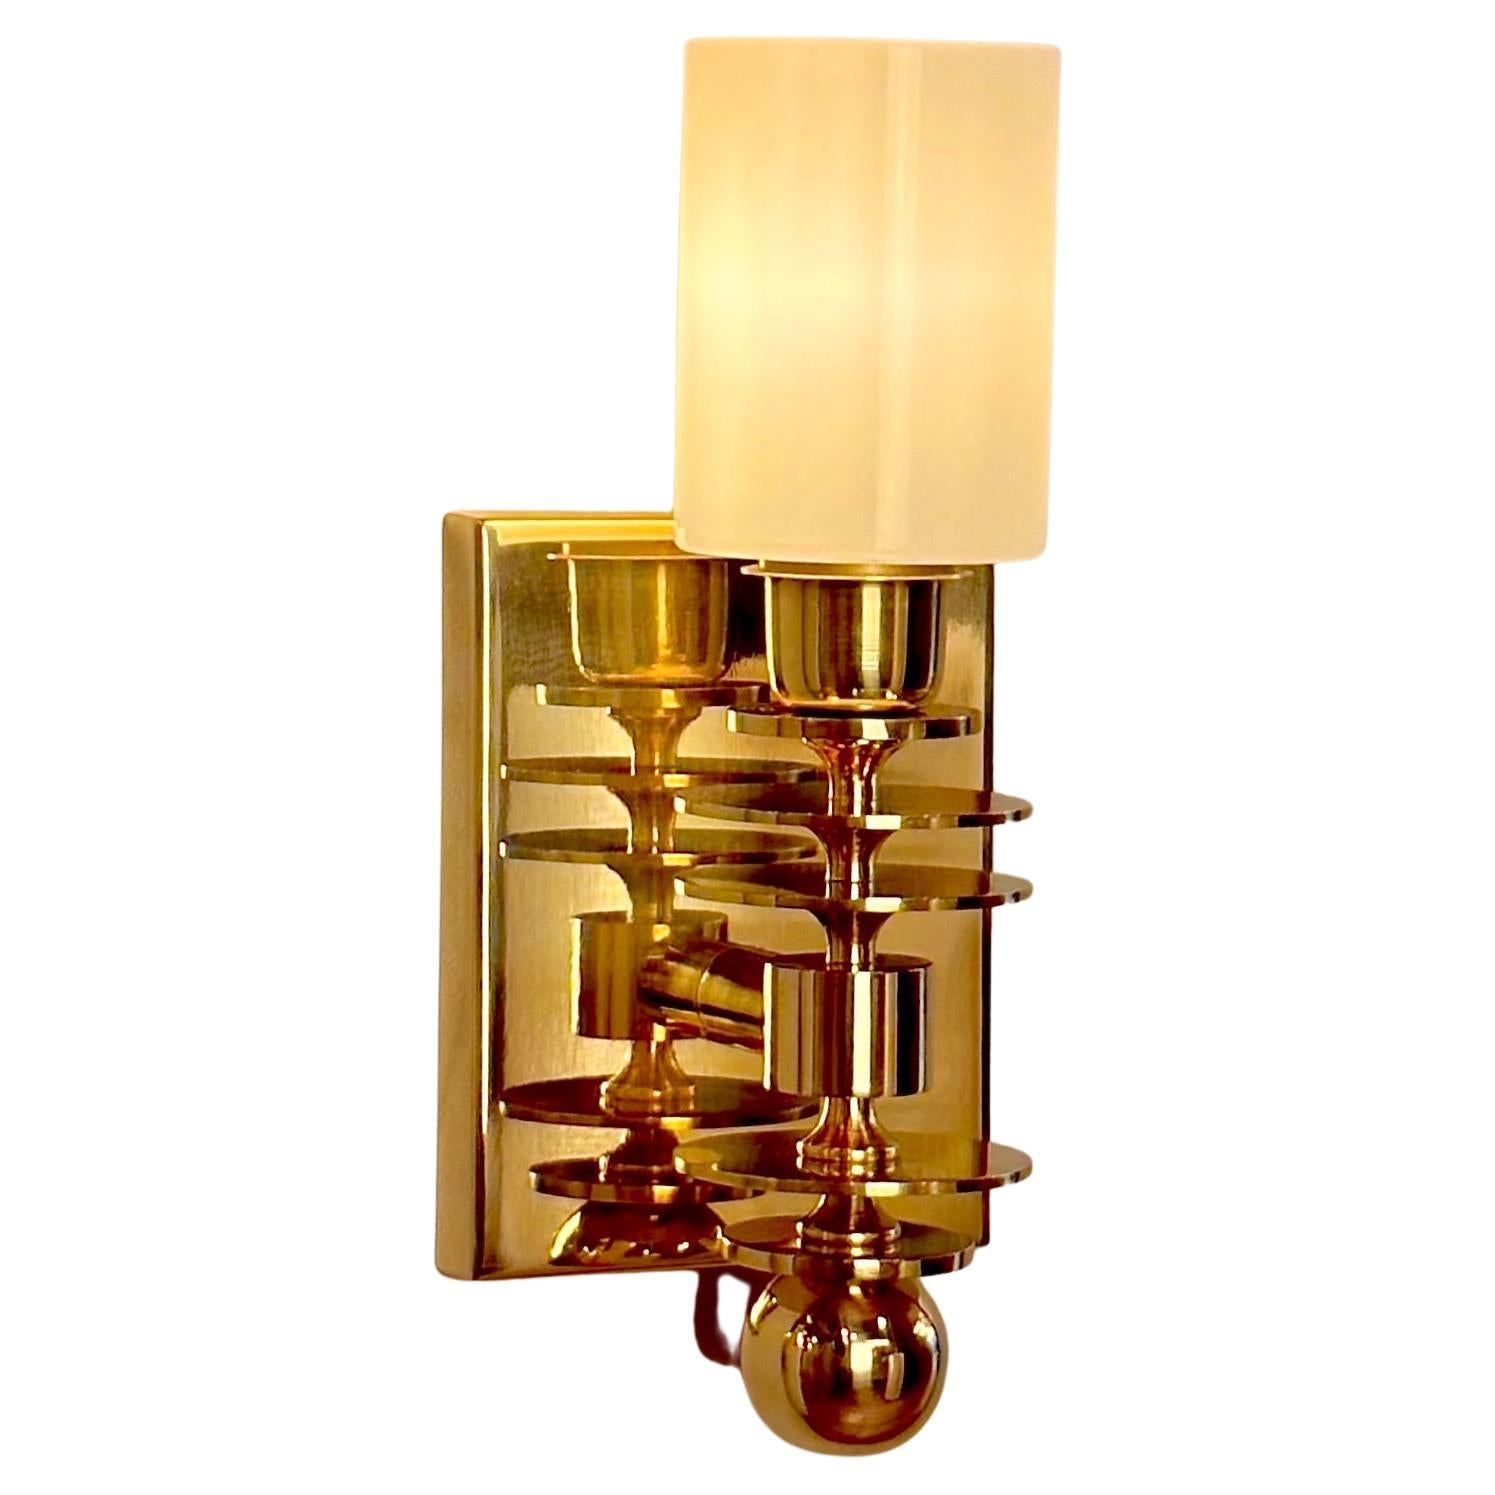 Marsala Brass Wall Sconce Mid-Century Modern Lighting For Sale